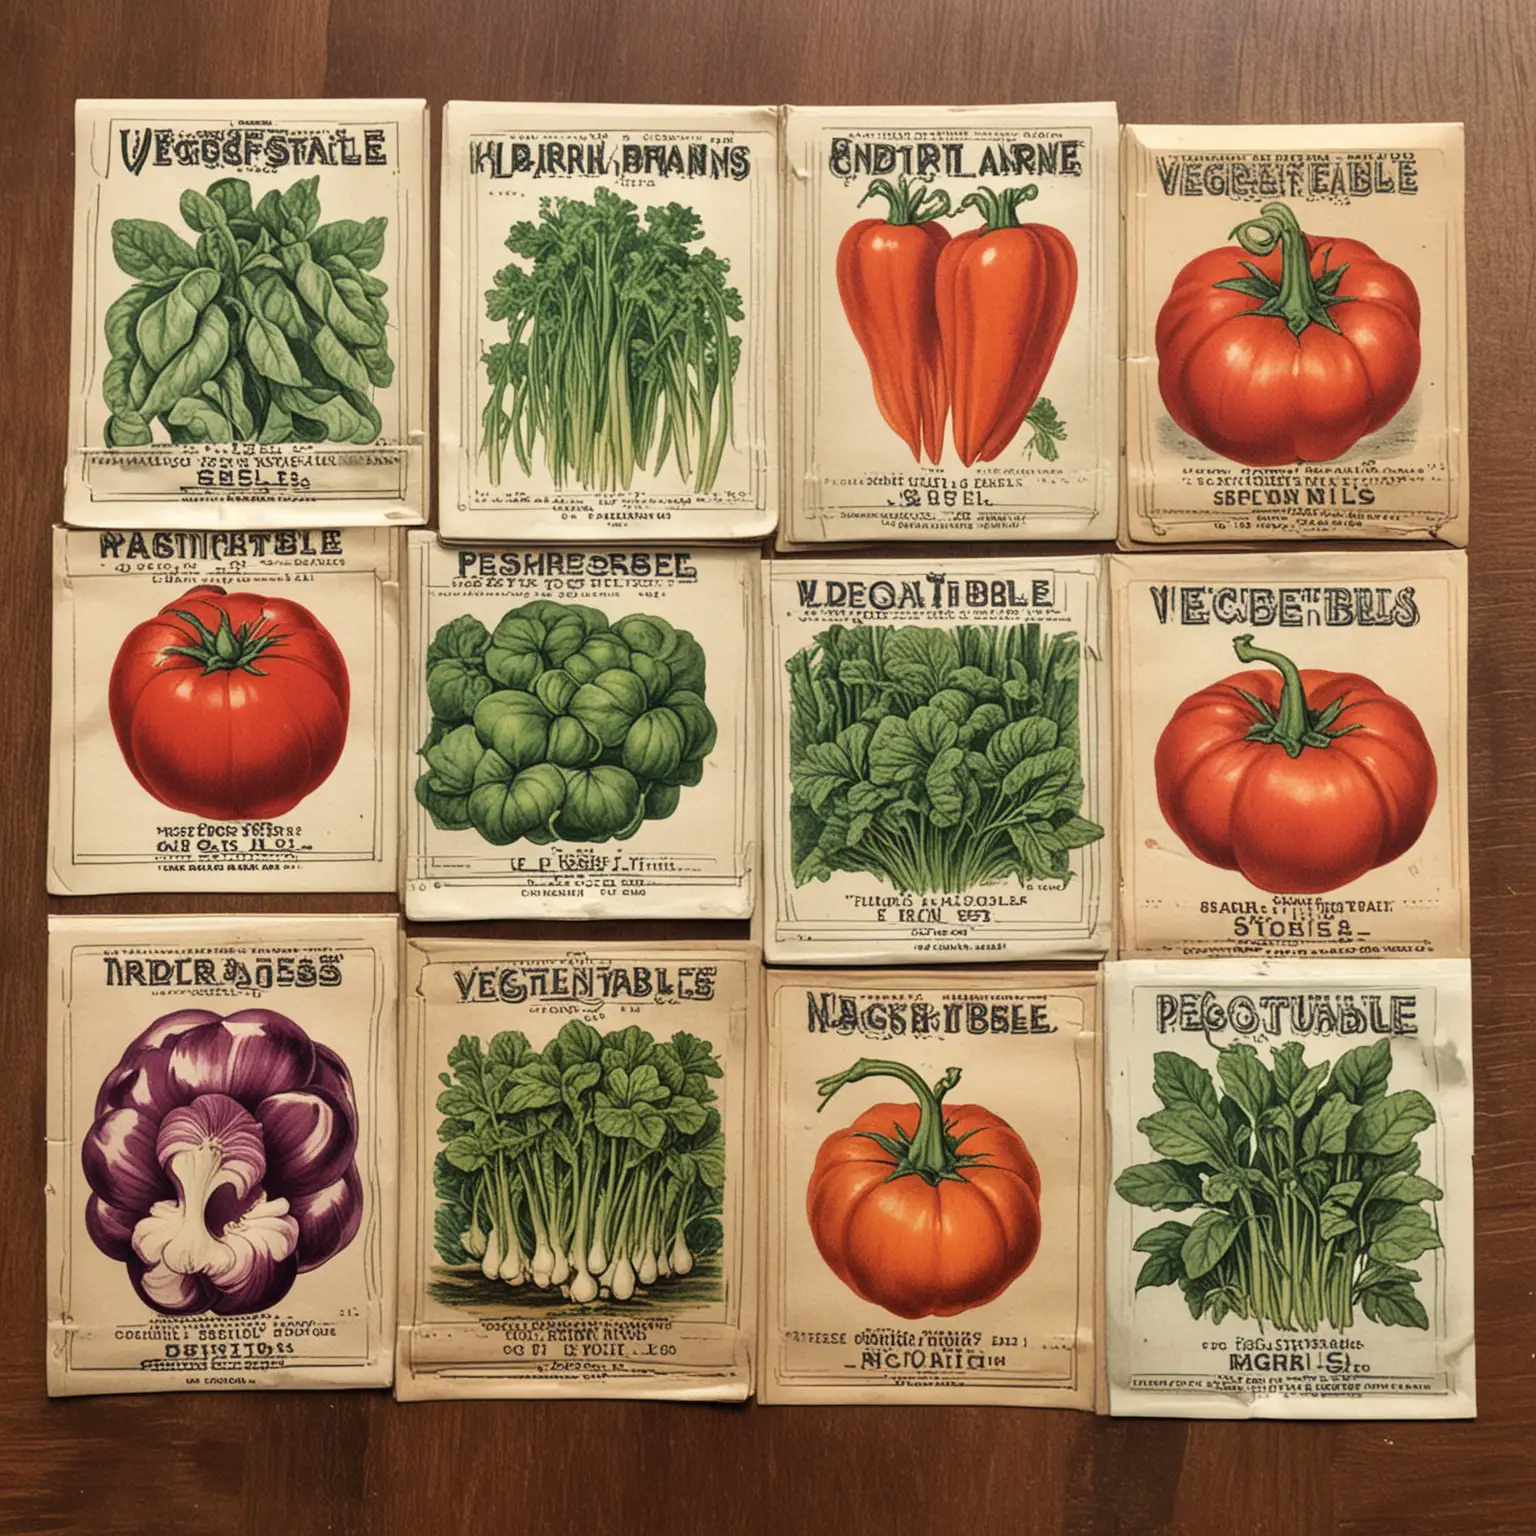 Vintage Vegetable Seed Packets Displayed on Wooden Shelves